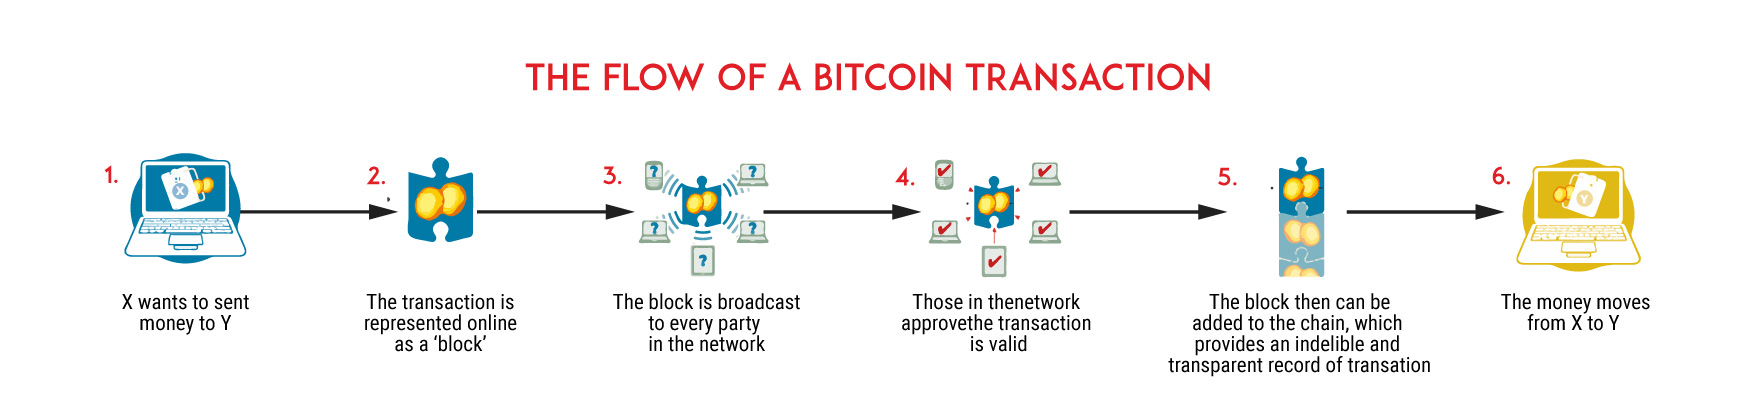 flow-of-bitcoin-transaction-1